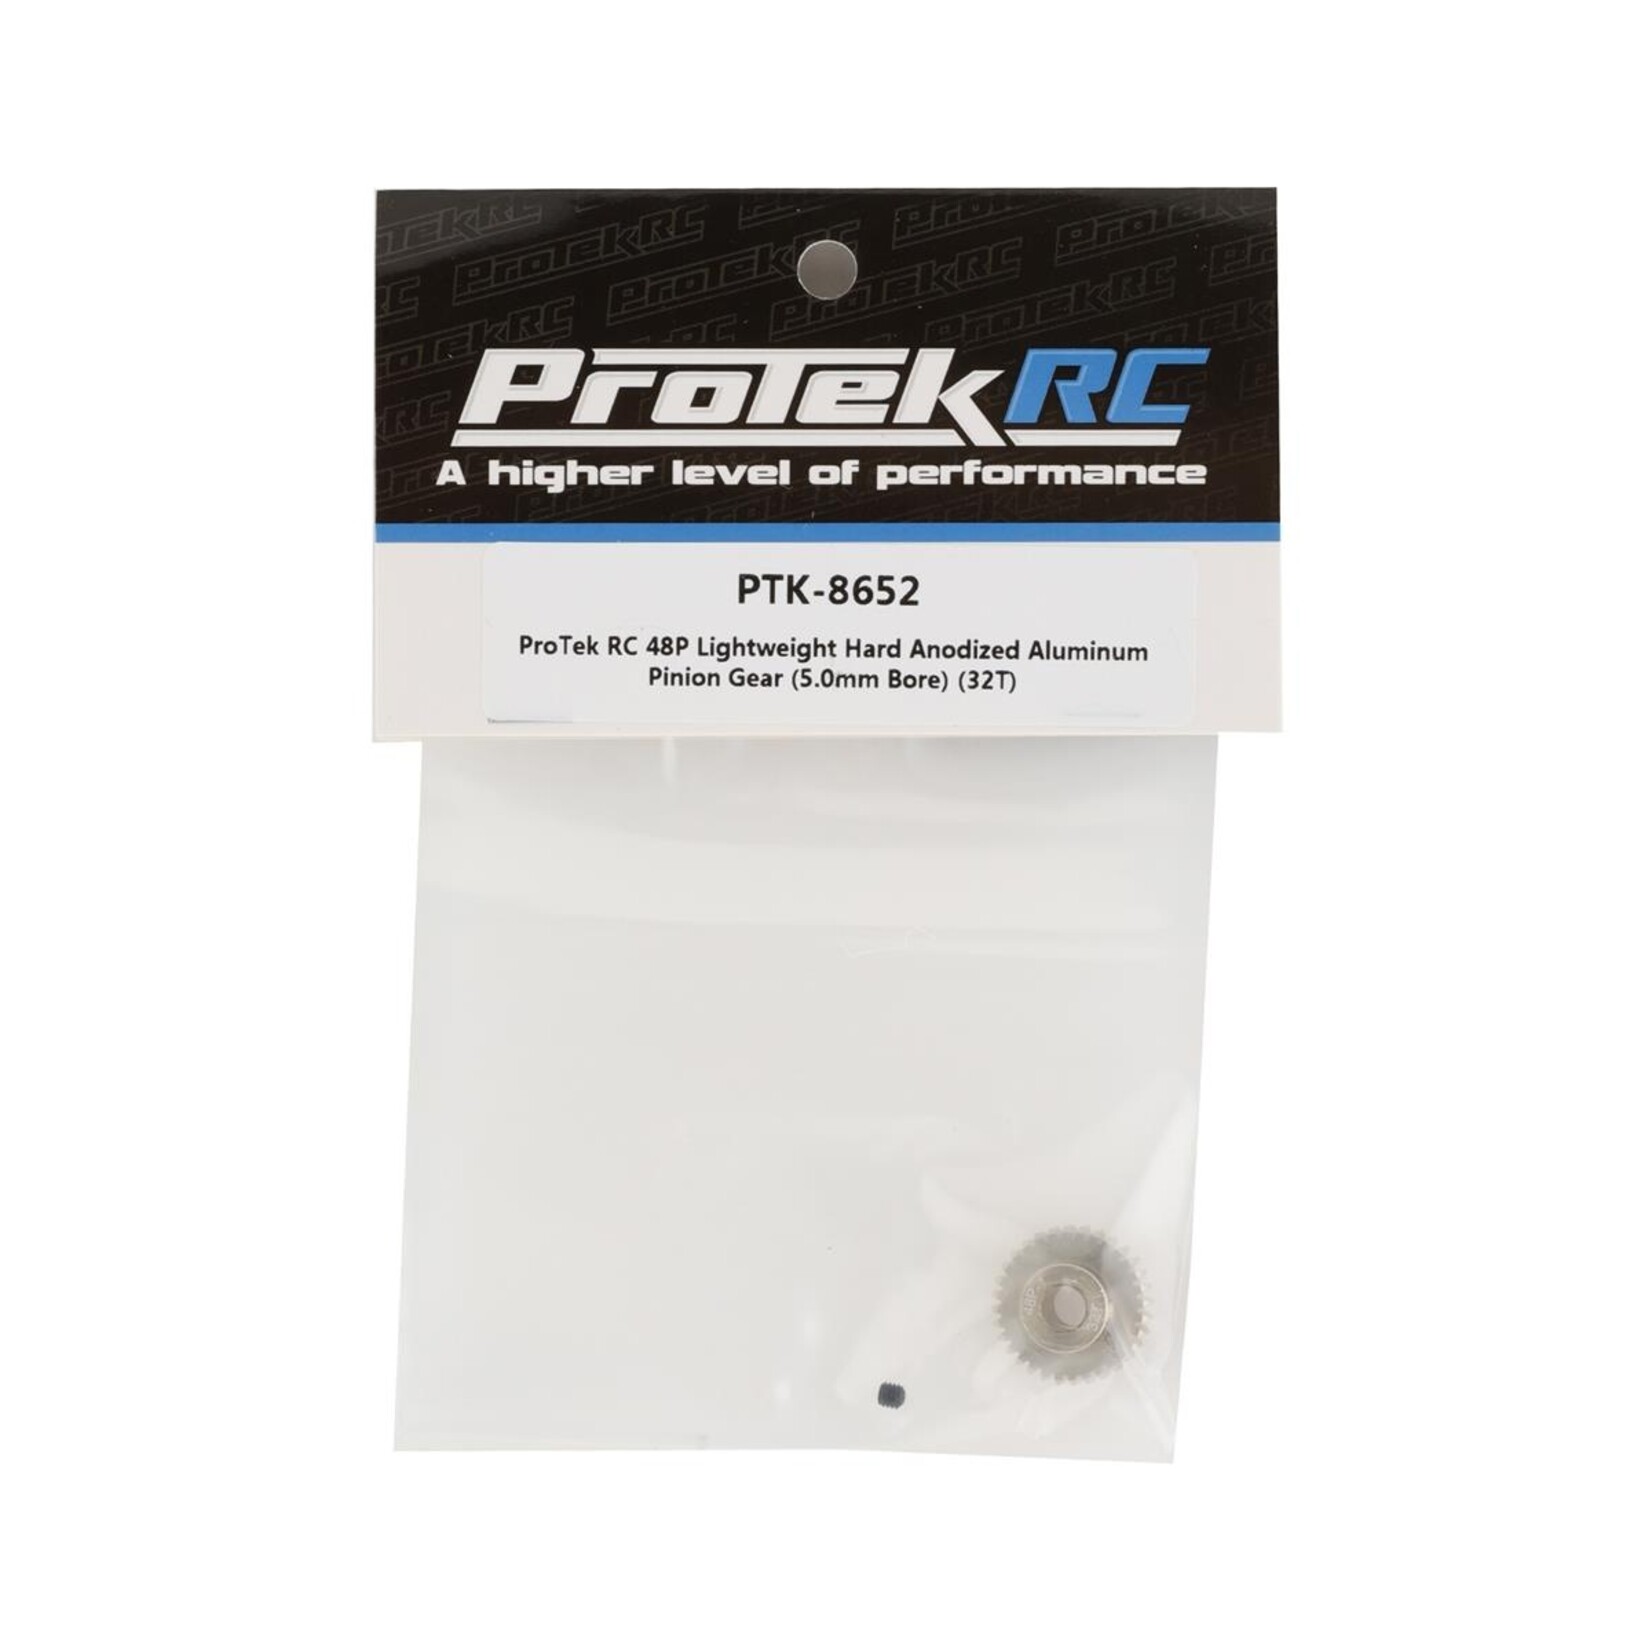 ProTek RC ProTek RC 48P Lightweight Hard Anodized Aluminum Pinion Gear (5.0mm Bore) (32T) #PTK-8652